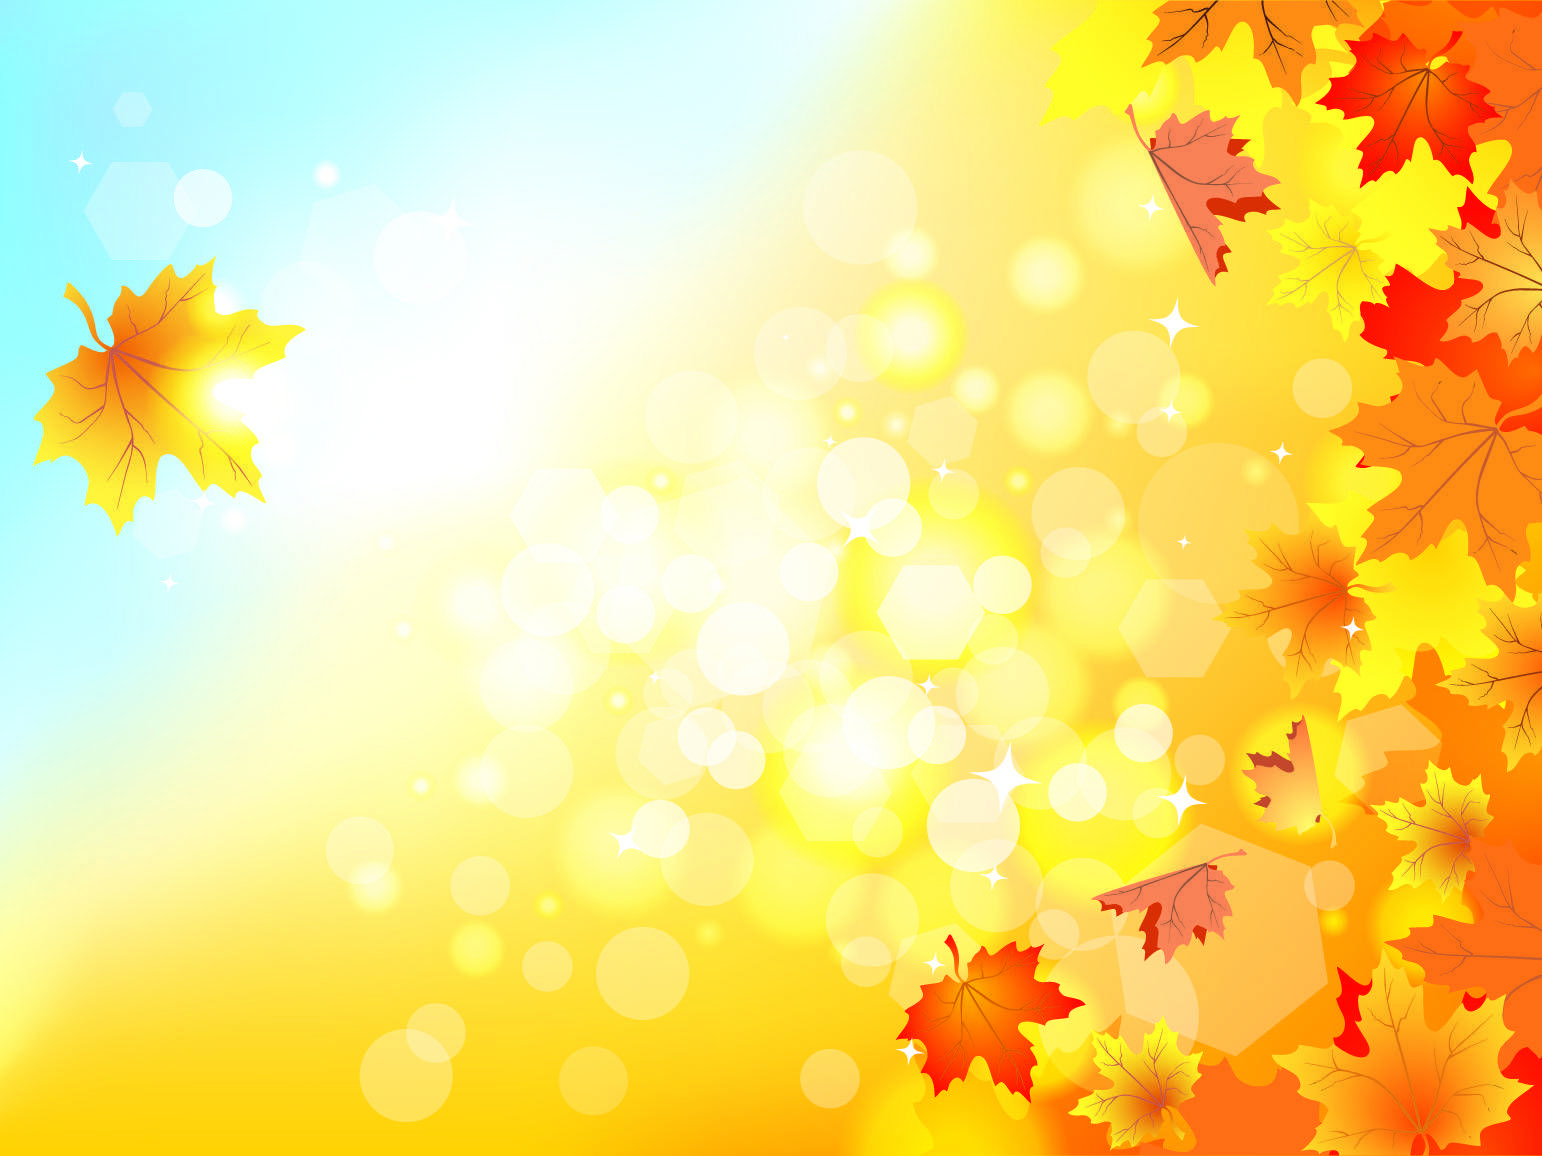 Beautiful autumn background 05 vector Free Vector / 4Vector